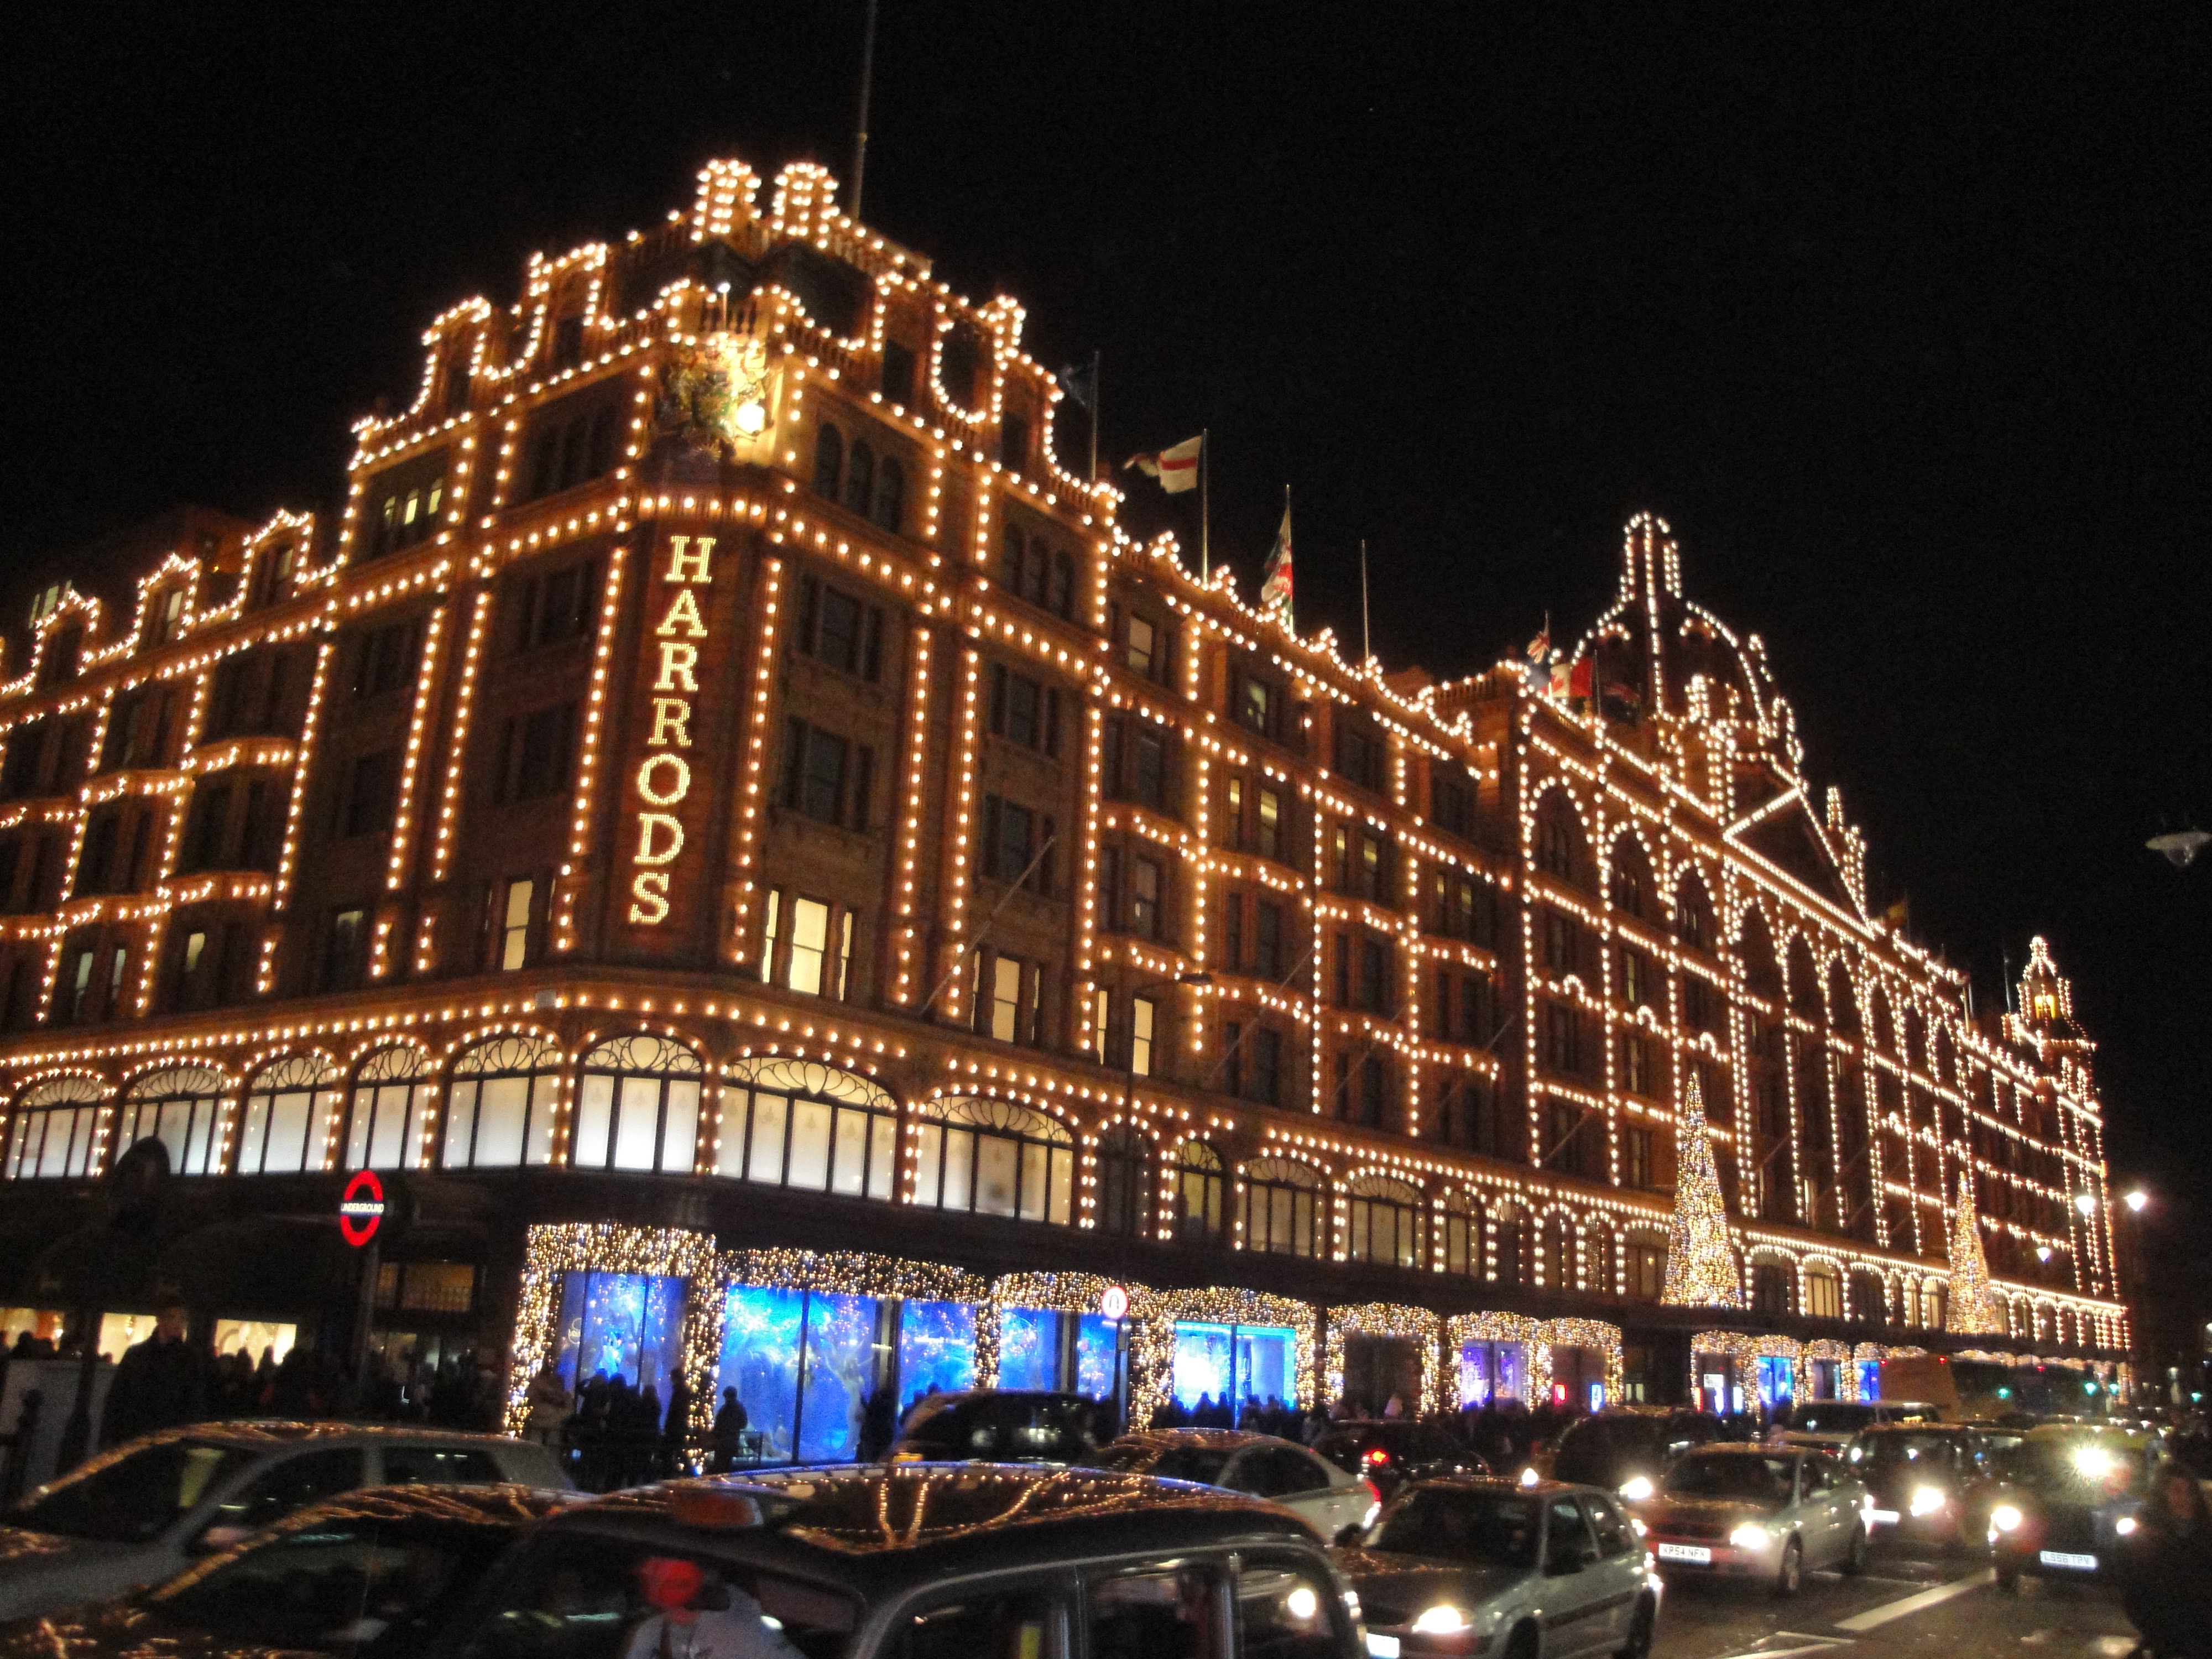 File:Harrods department store at night in November 2011.JPG ...